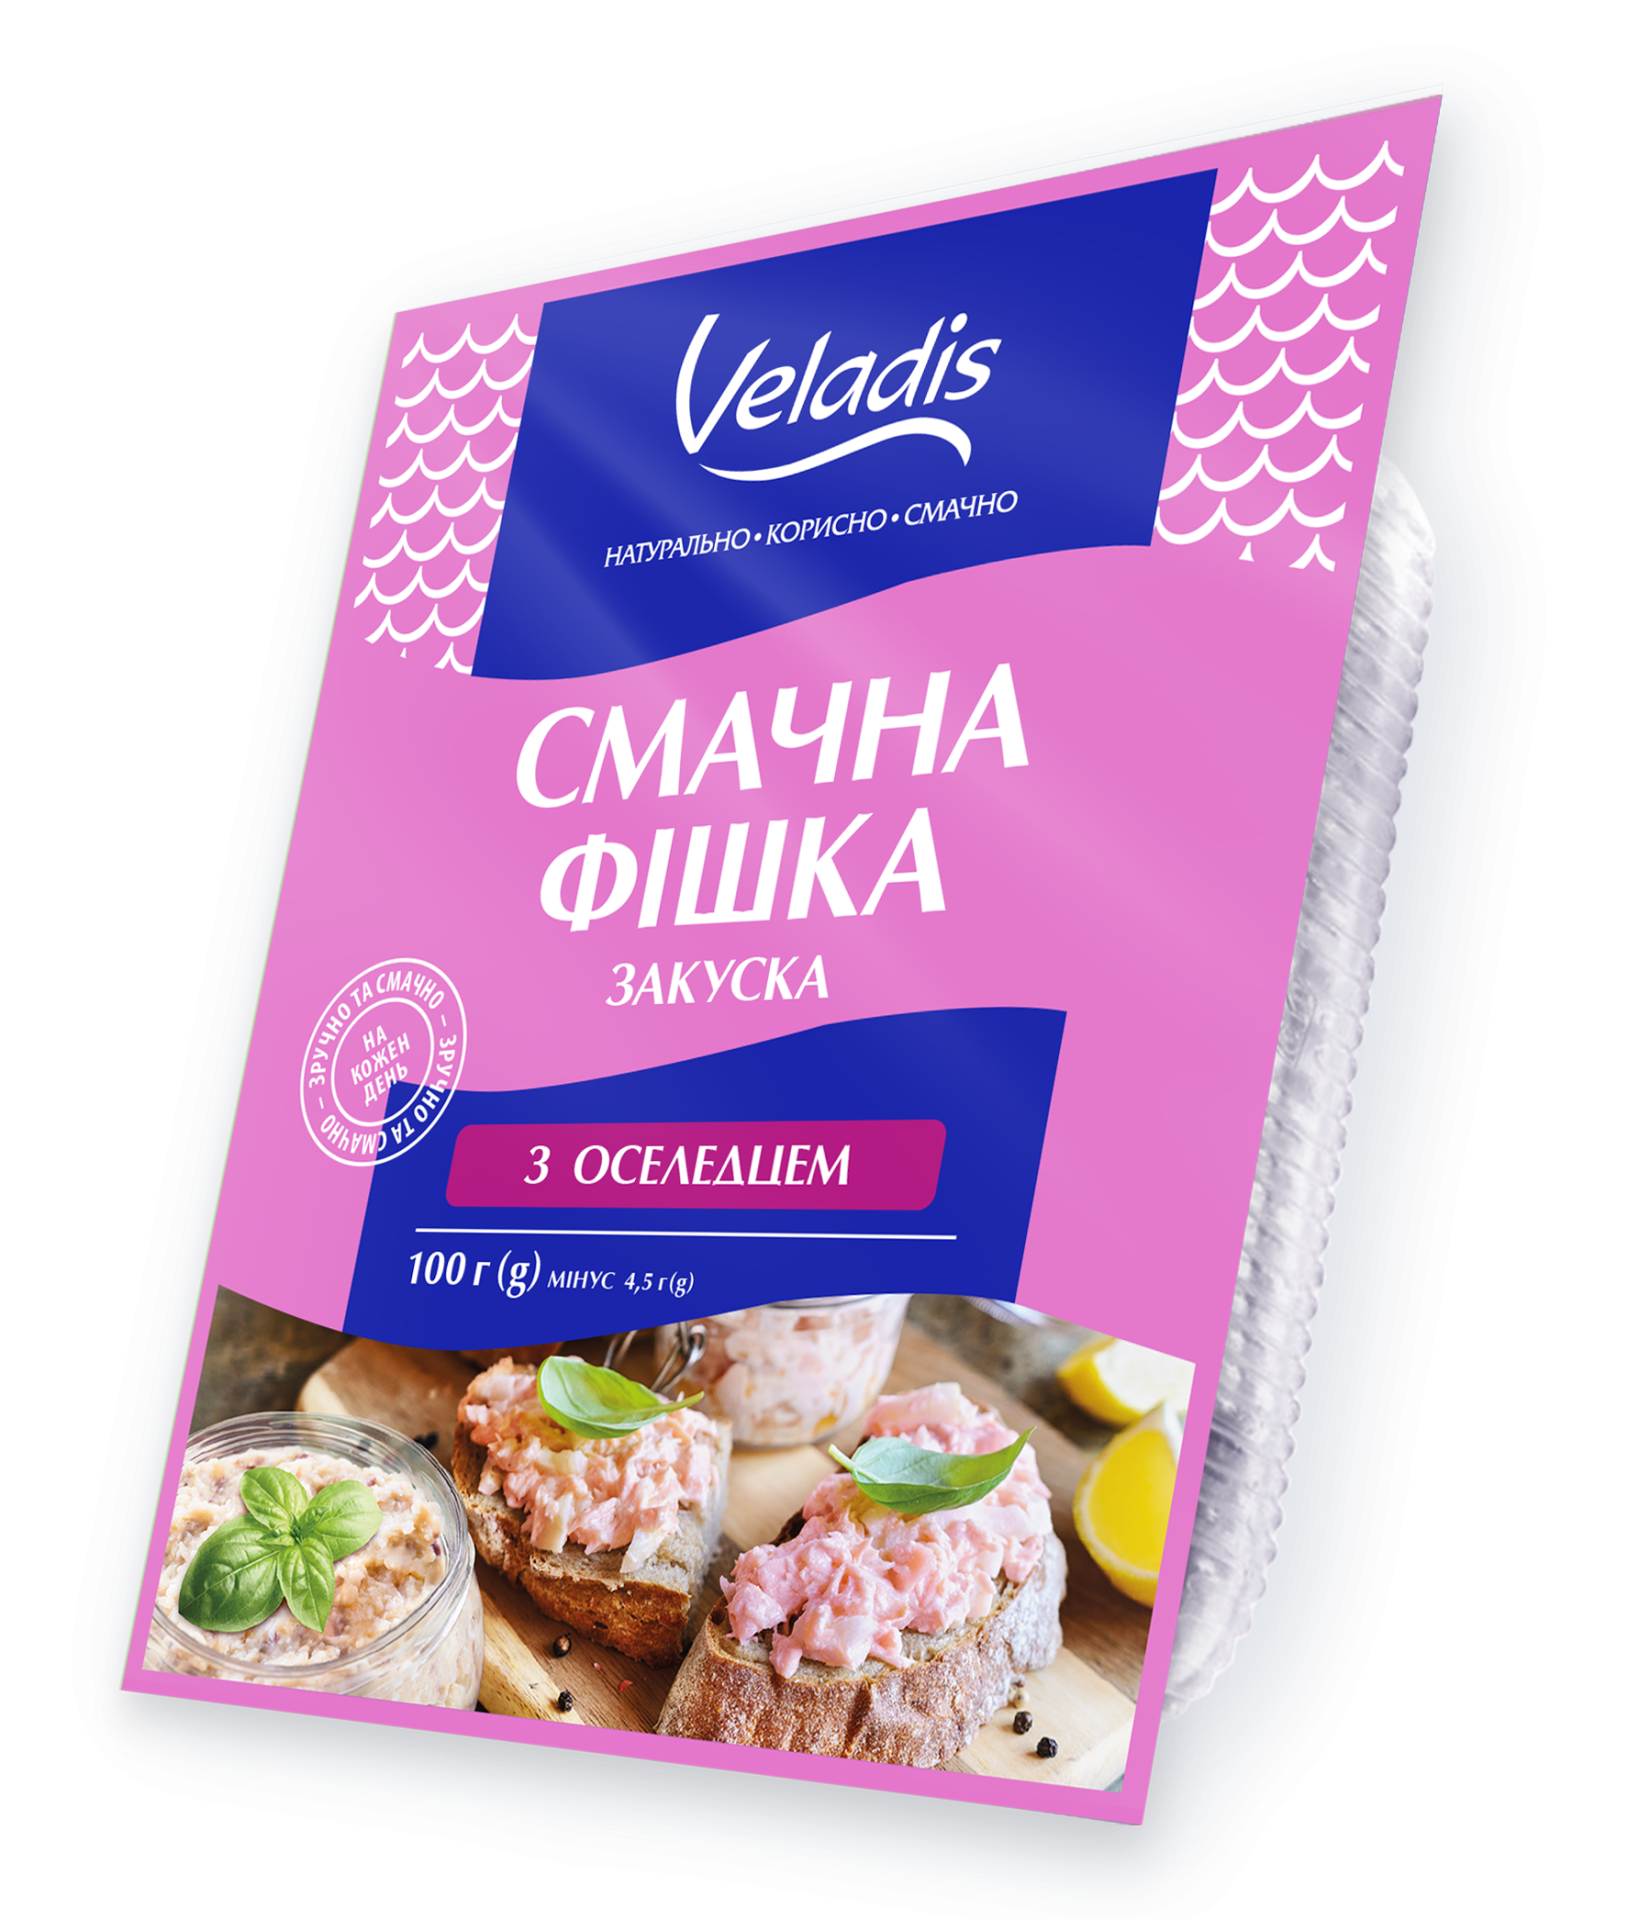 Fish appetizer "Smachna Fishka" with herring